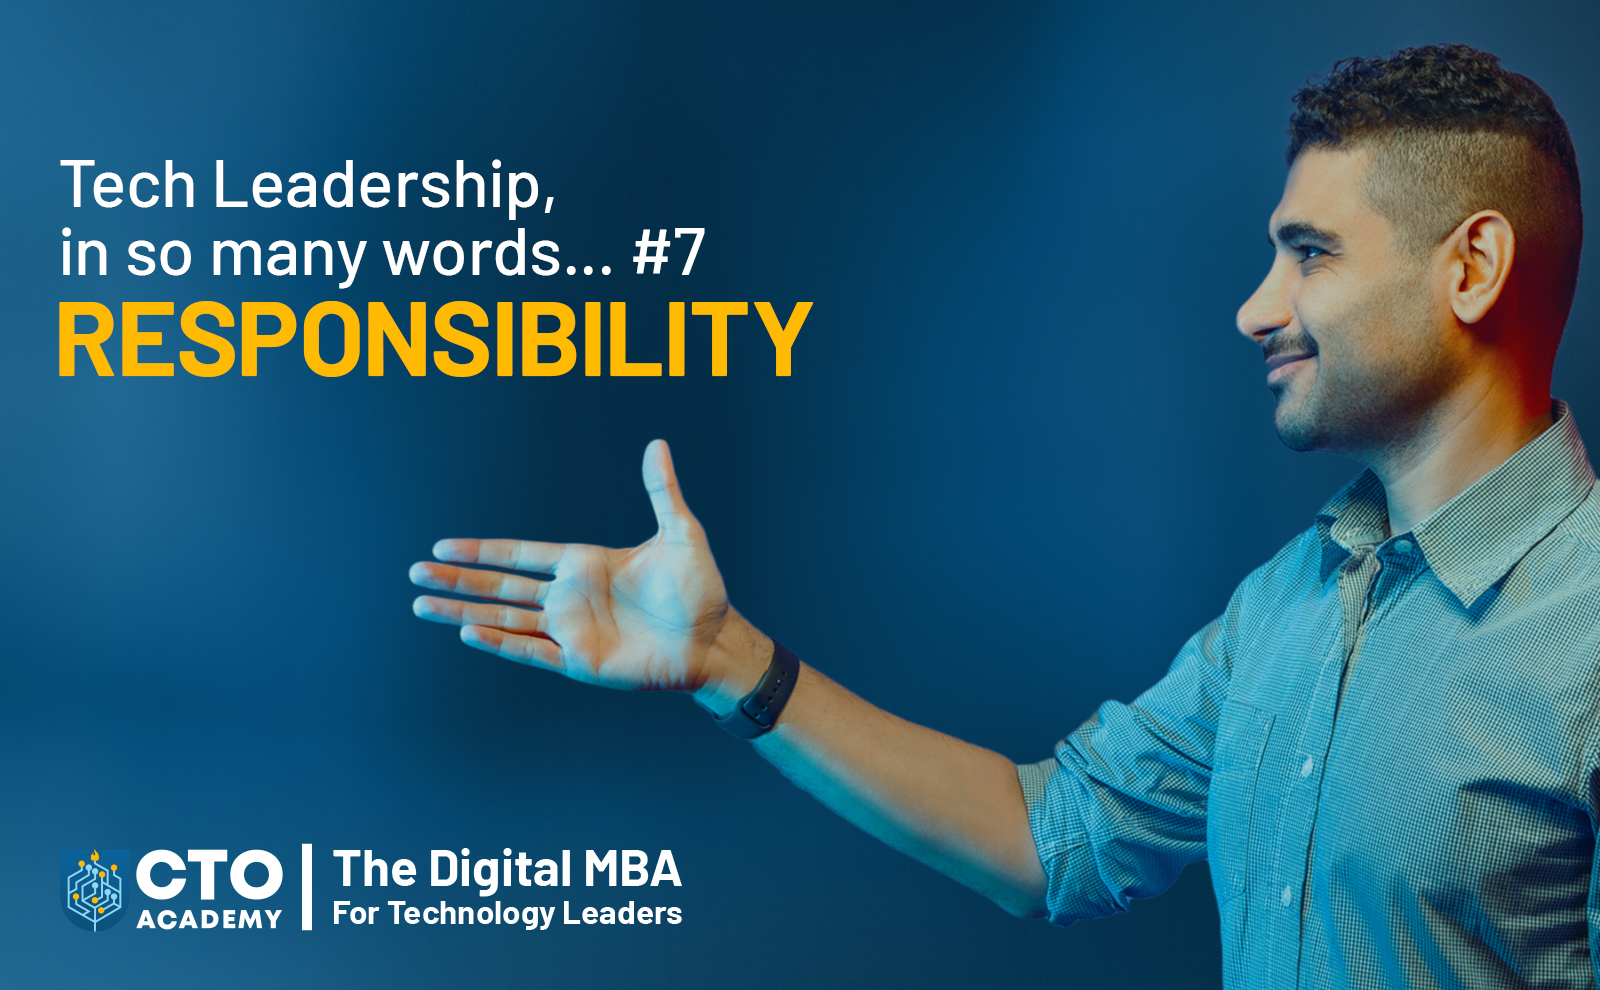 Tech Leadership, Responsibility - CTO Academy